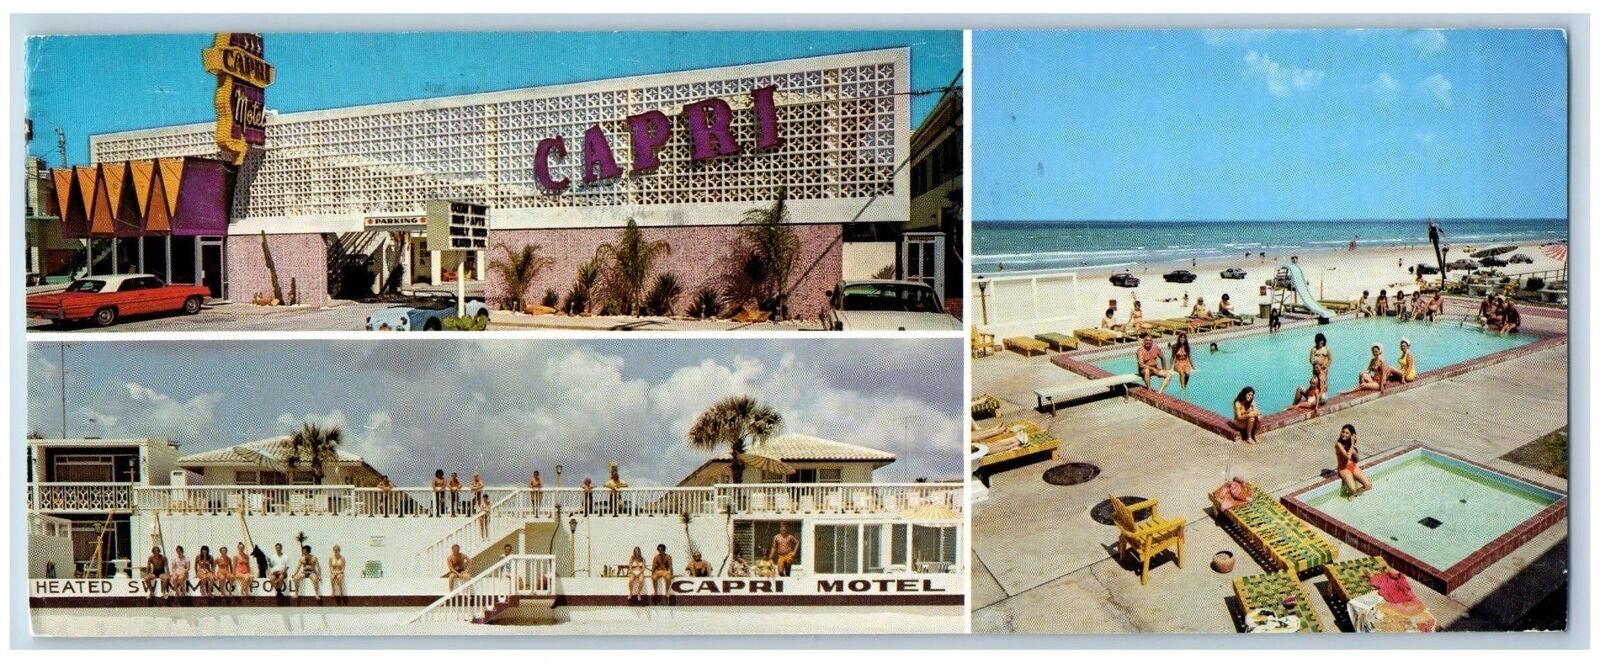 Daytona Florida Postcard Oversized The Capri Motel Swimming Pool 1979 Vintage